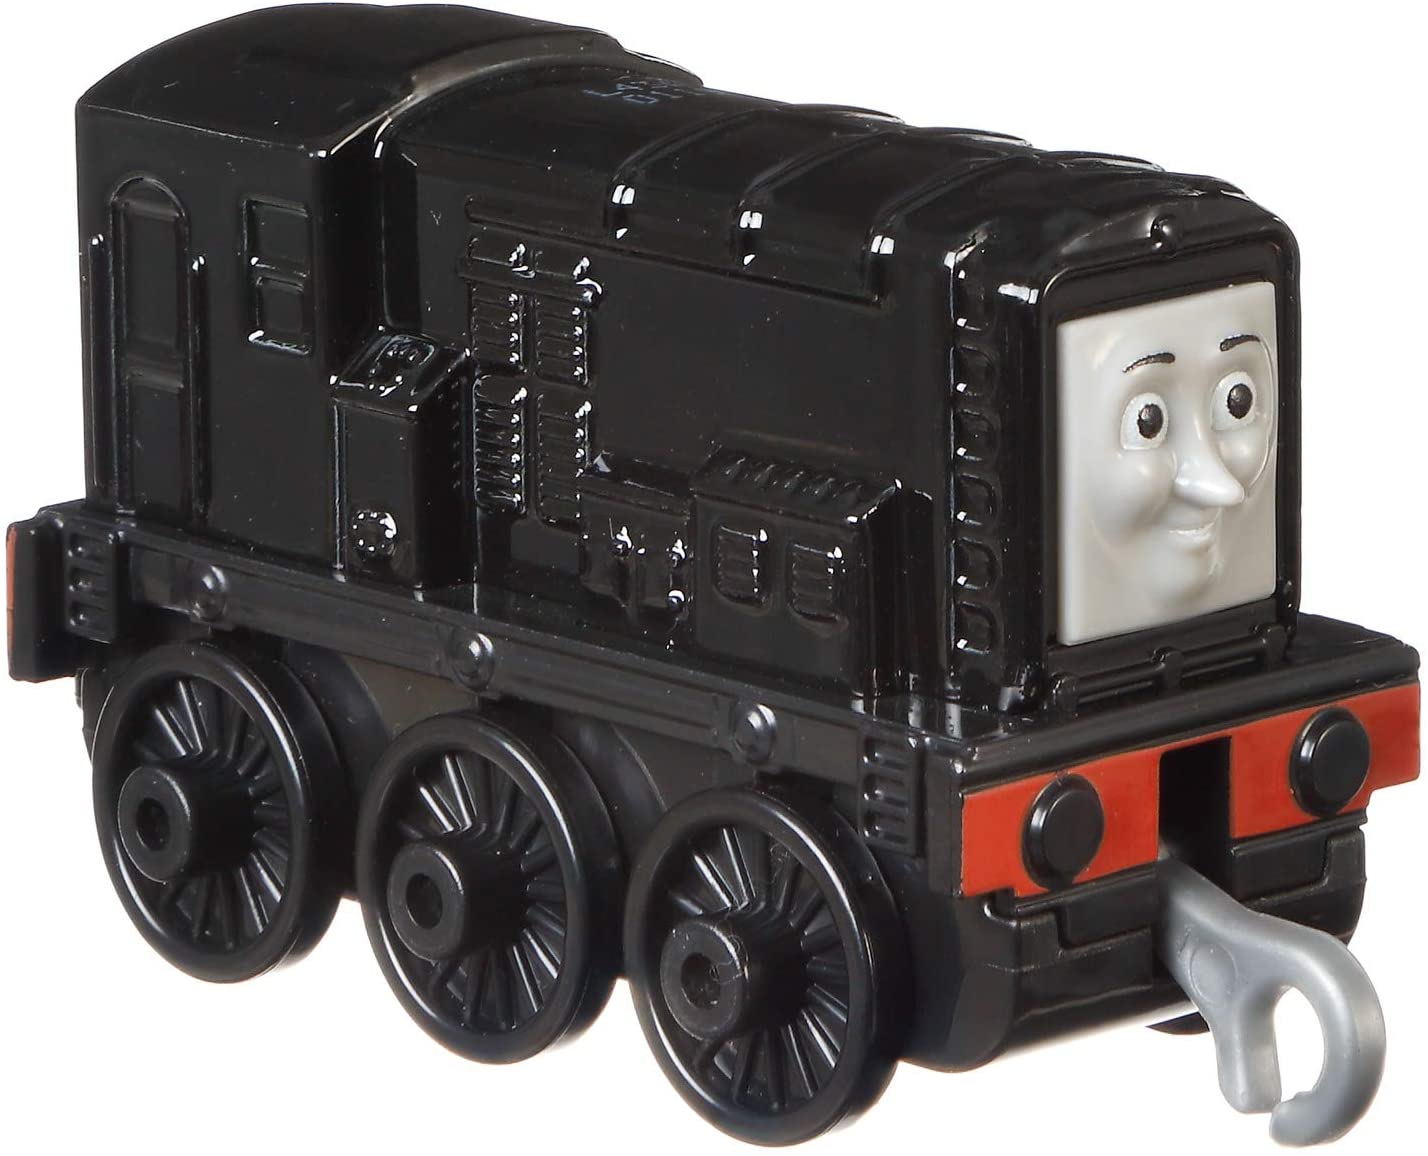 Thomas & Friends  Diesel Push Along